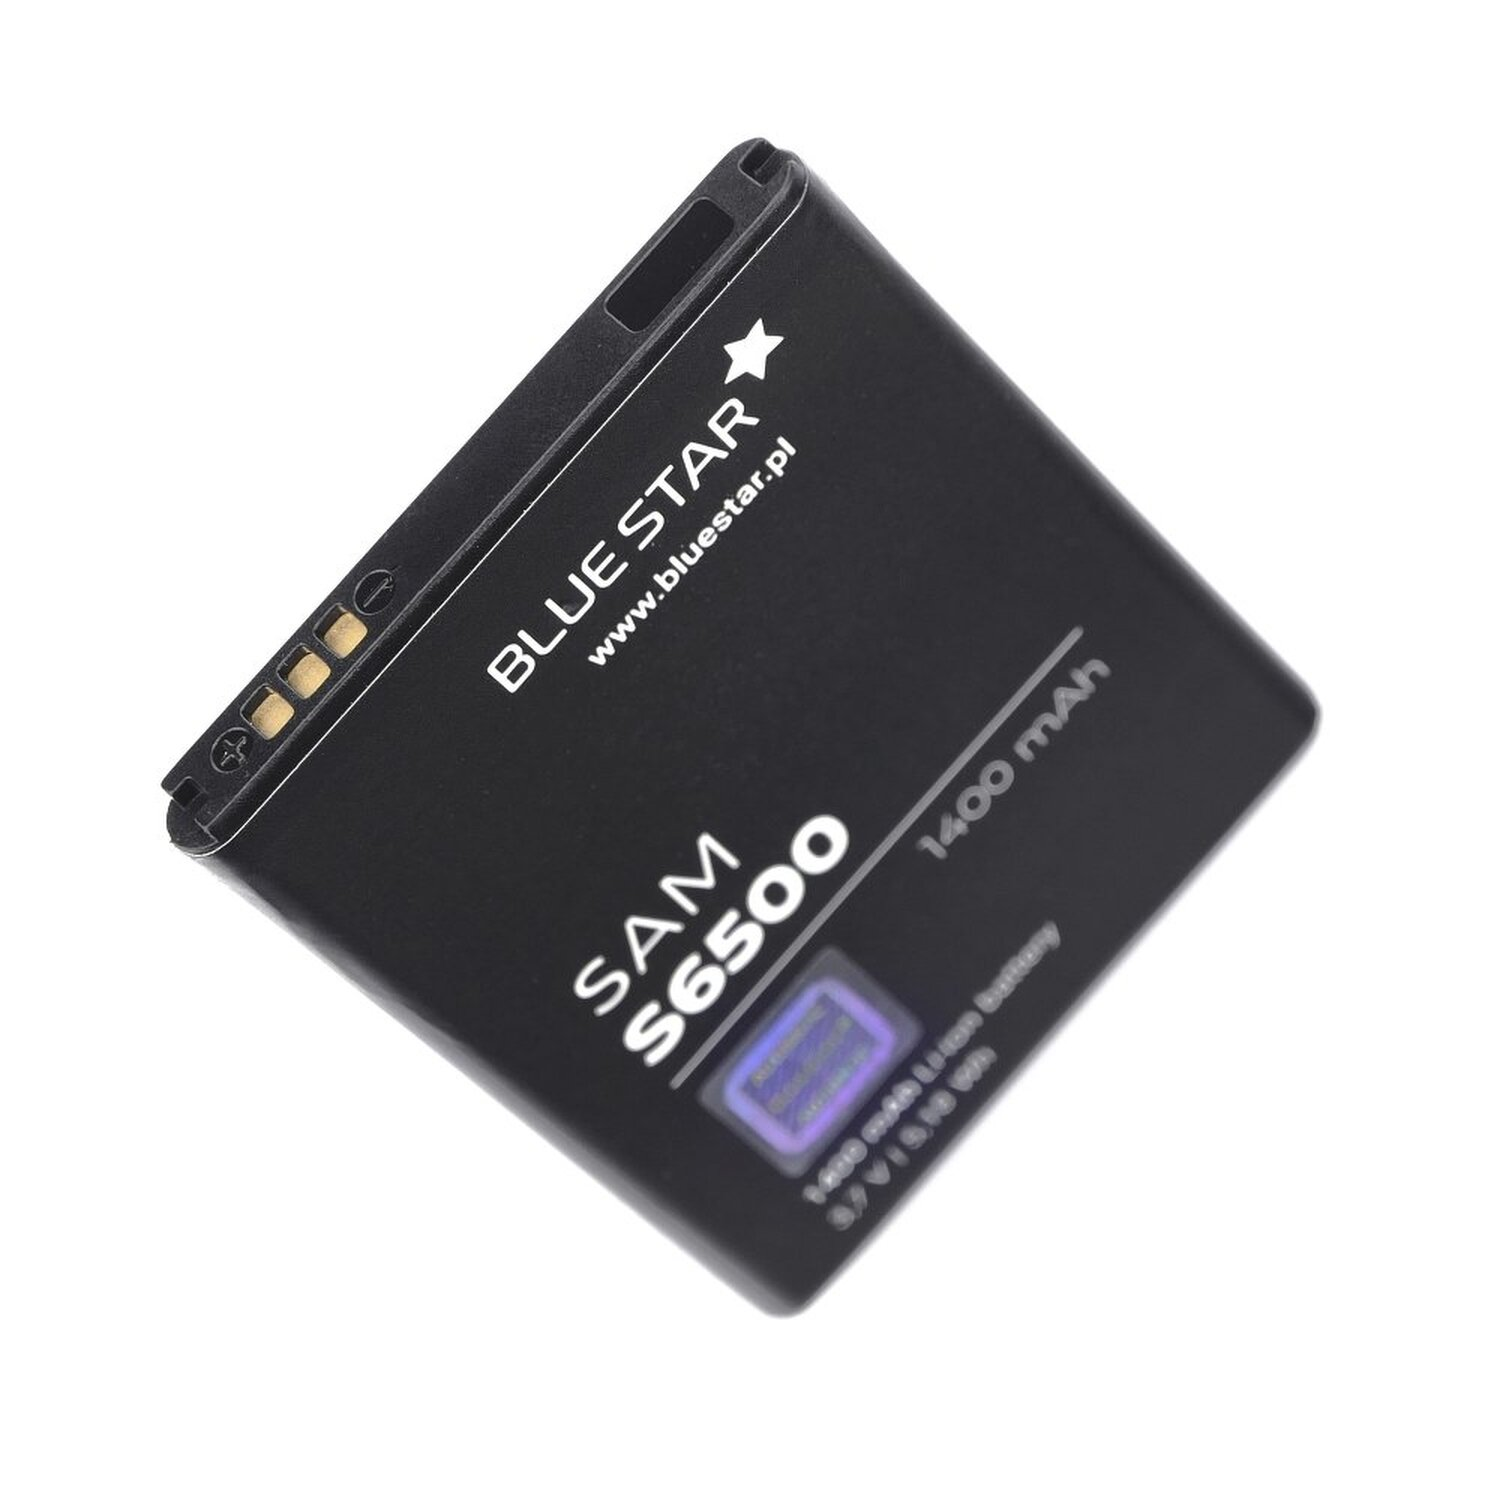 BLUESTAR Akku Young Samsung Li-Ion S6310 für Handyakku Galaxy